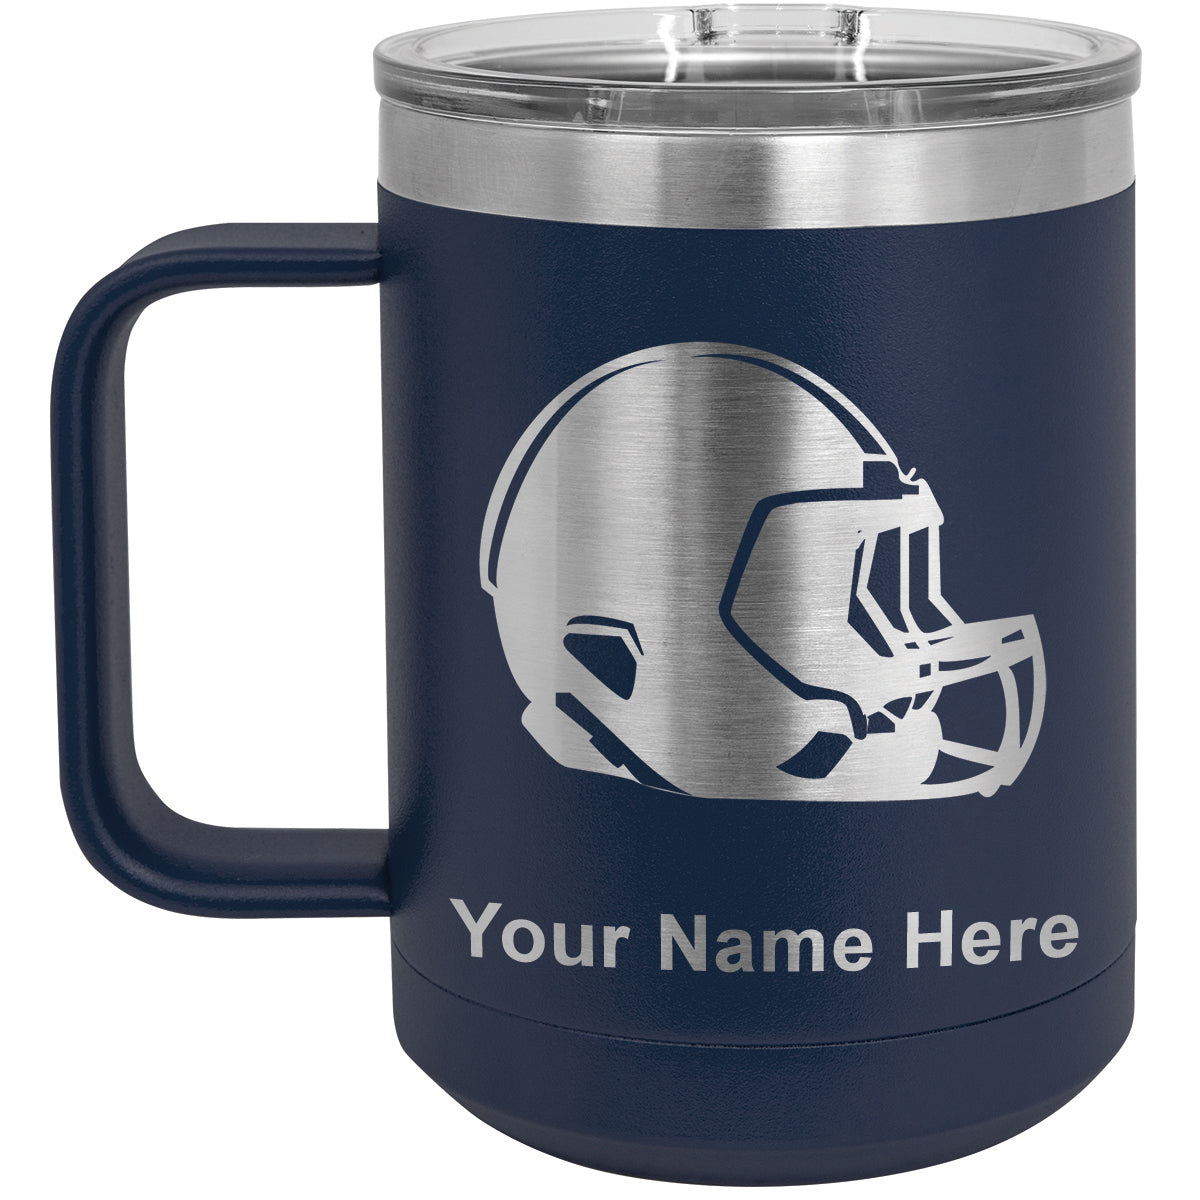 15oz Vacuum Insulated Coffee Mug, Football Helmet, Personalized Engraving Included